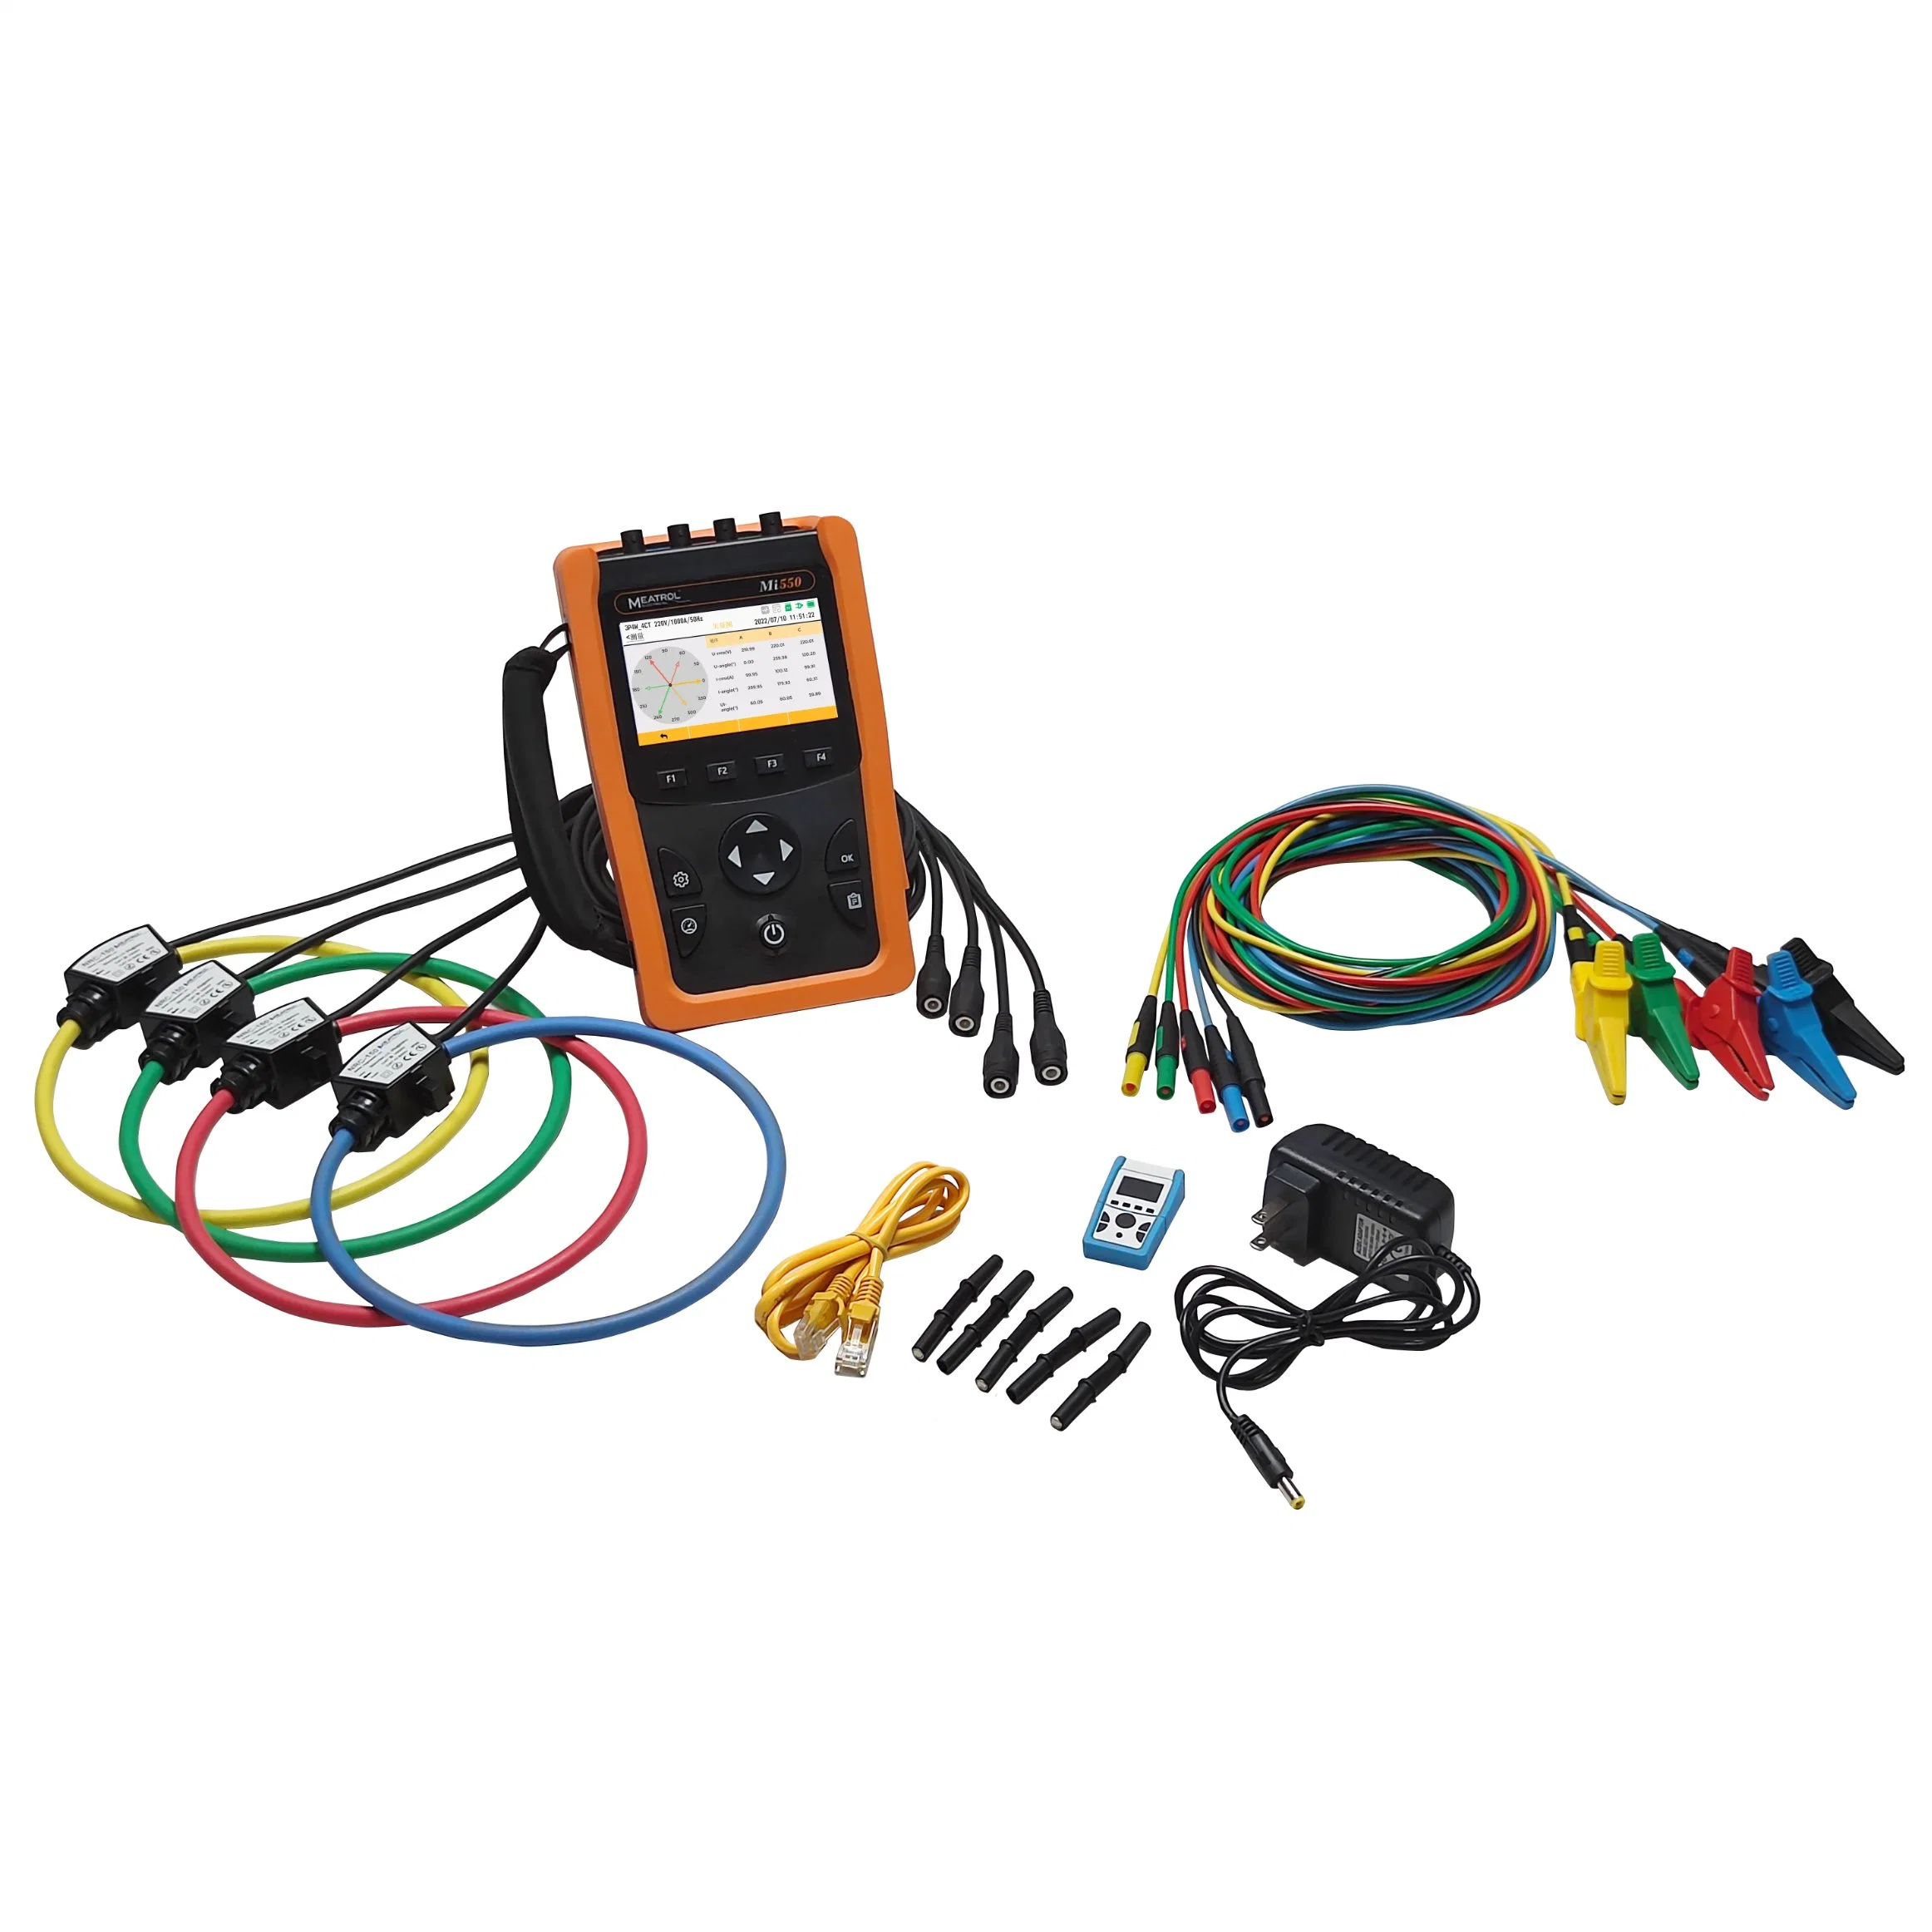 Smart Electricity Meter Meatrol Mi550 Power Analyzer Rogowski Current Measuring Instruments